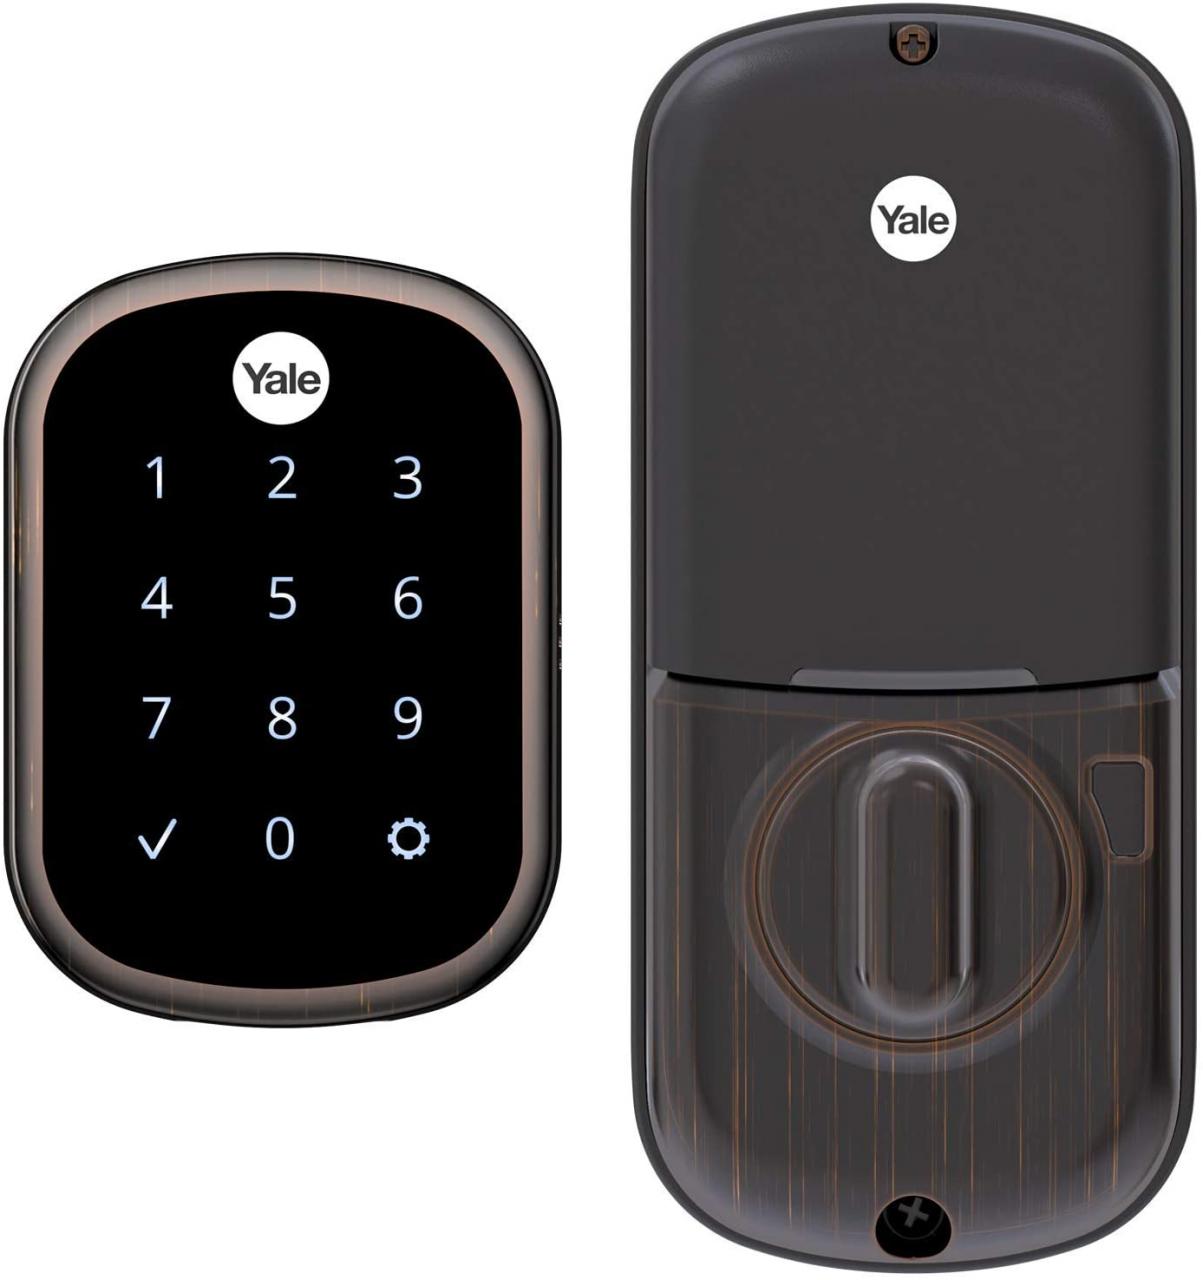 Buy Yale Assure Lock SL - Key-Free Touchscreen Door Lock in Bronze Online  in Hong Kong. B077YRHT7N